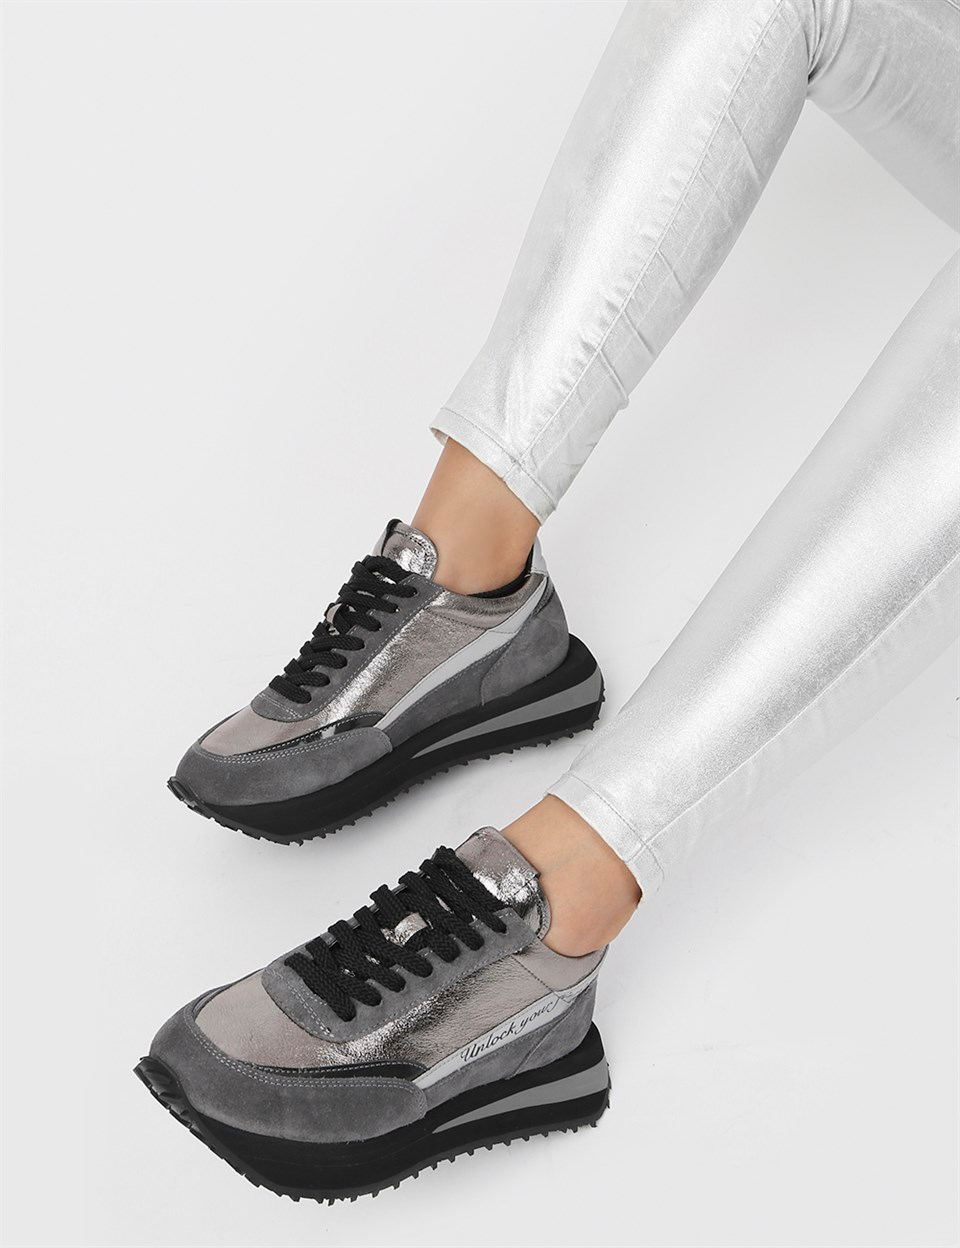 Santıago Grey Suede Women's Sneaker - İLVİ